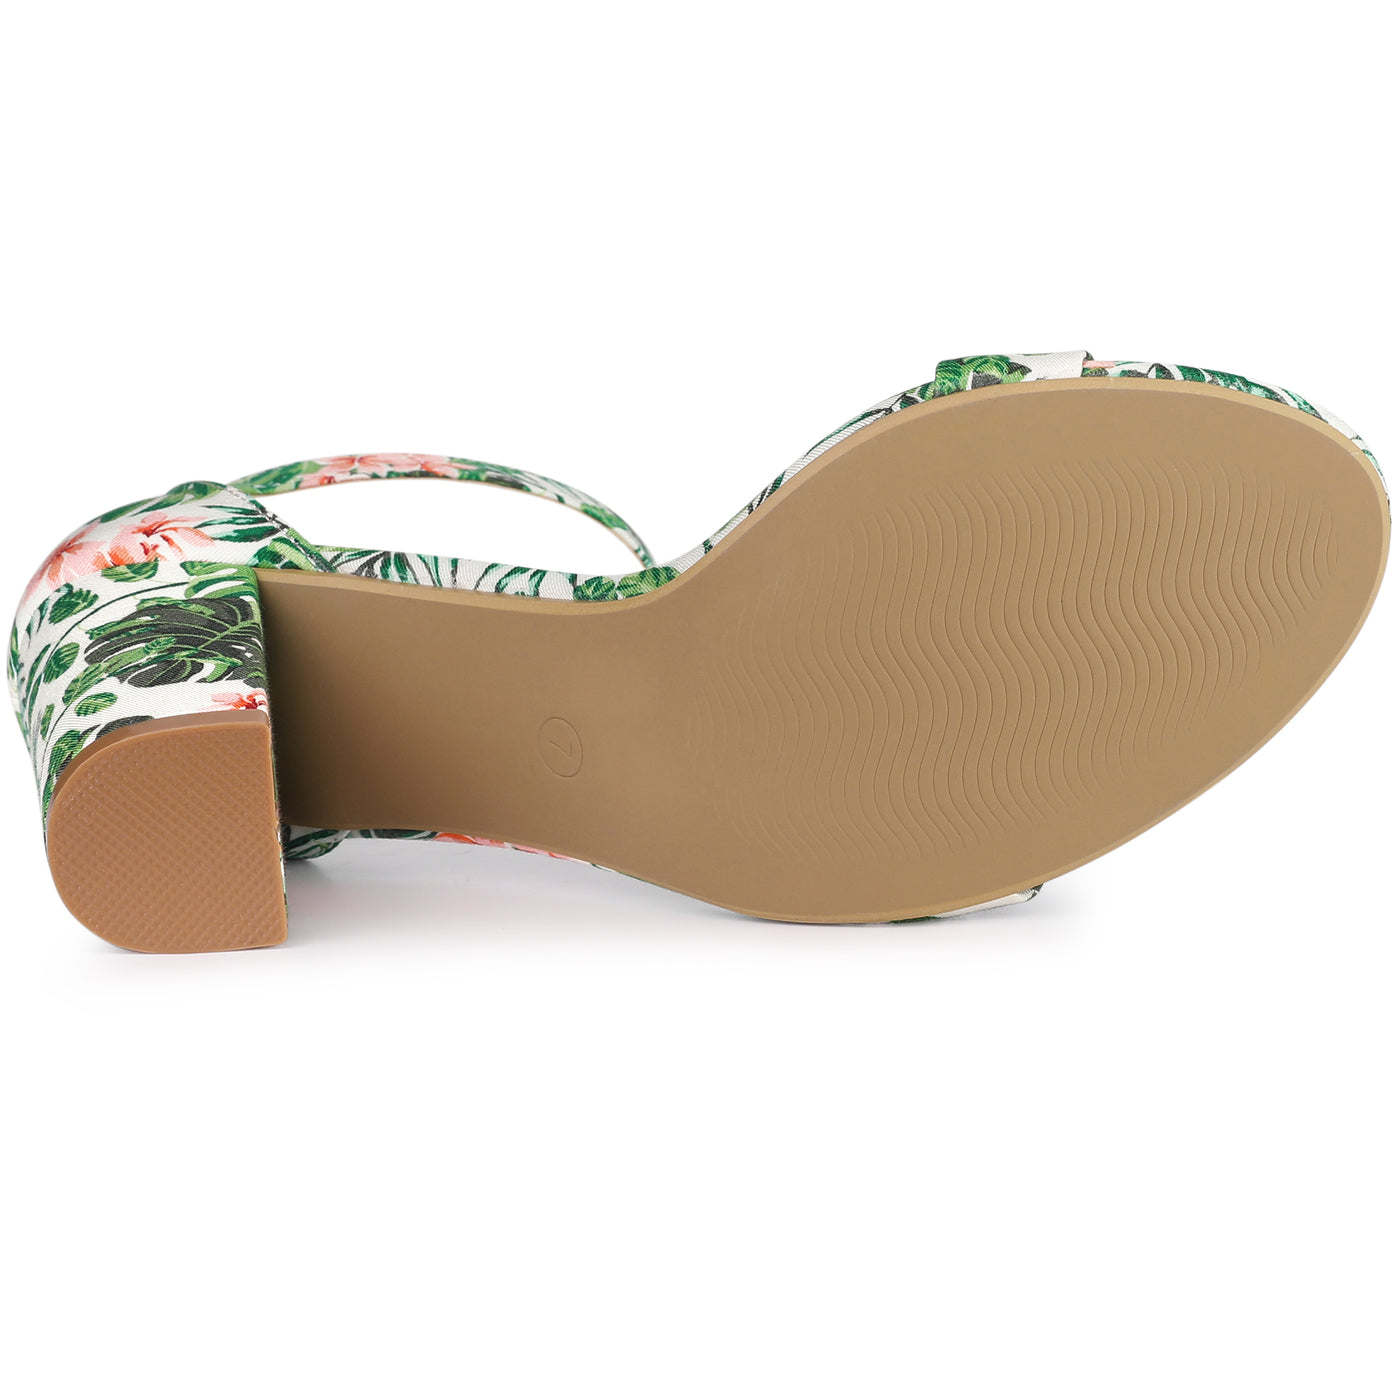 Allegra K Floral Printed Open Toe Ankle Strap Block Heel Sandals